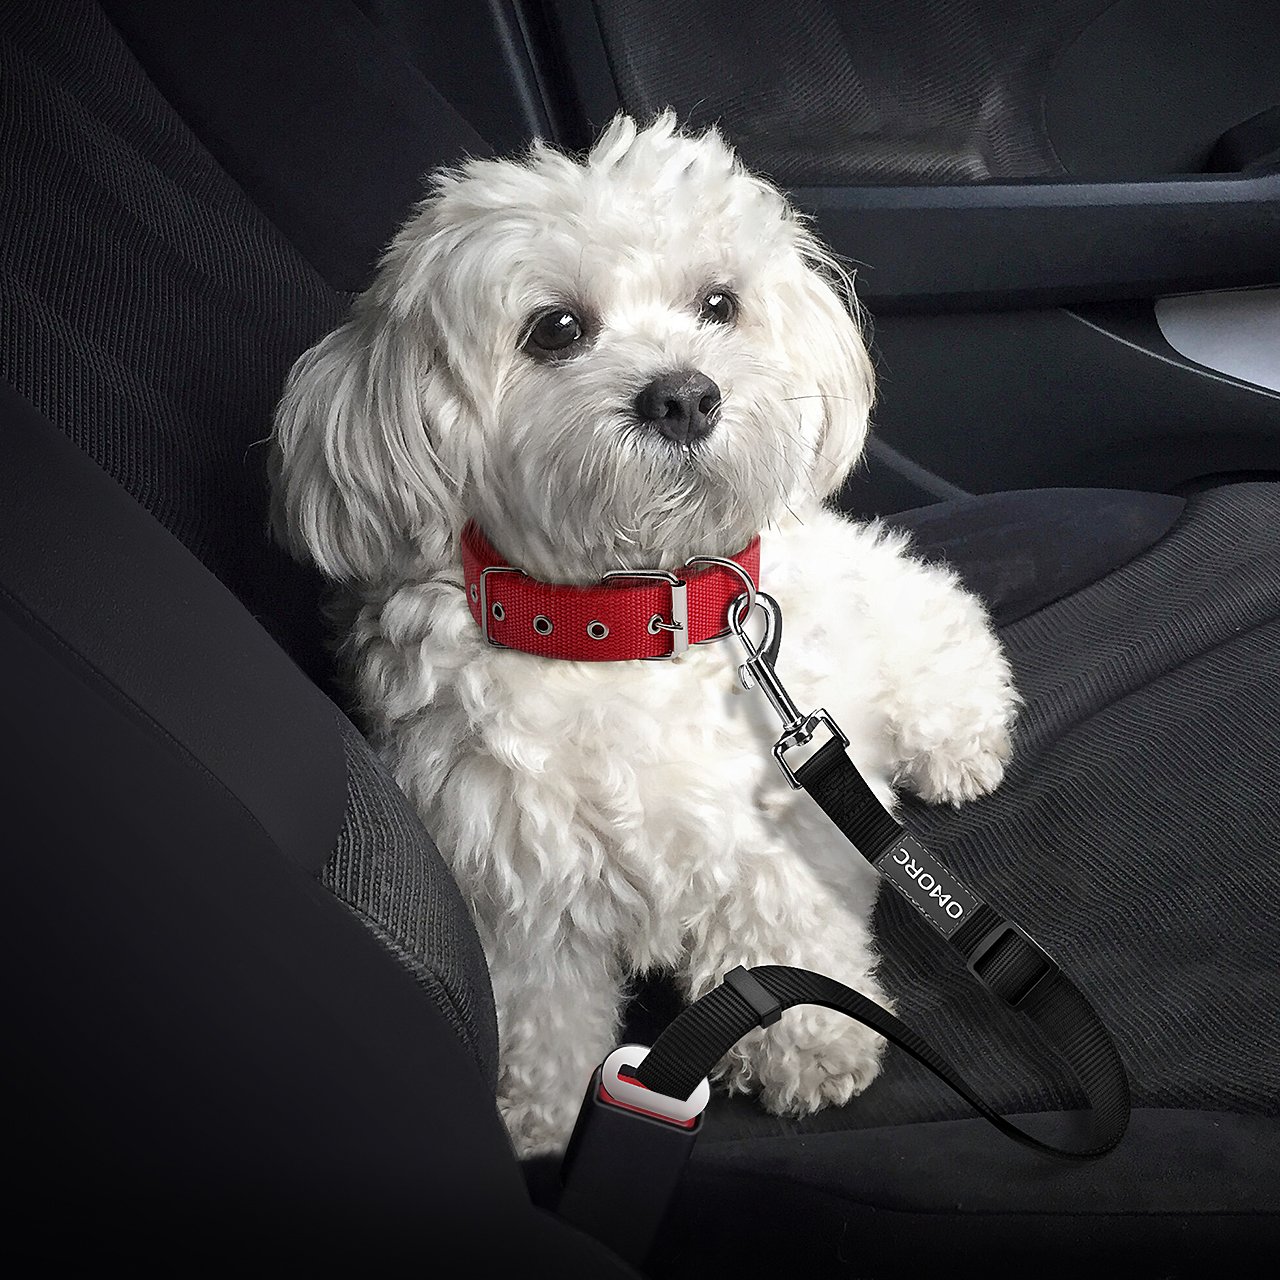 OMorc Dog Seat Belt